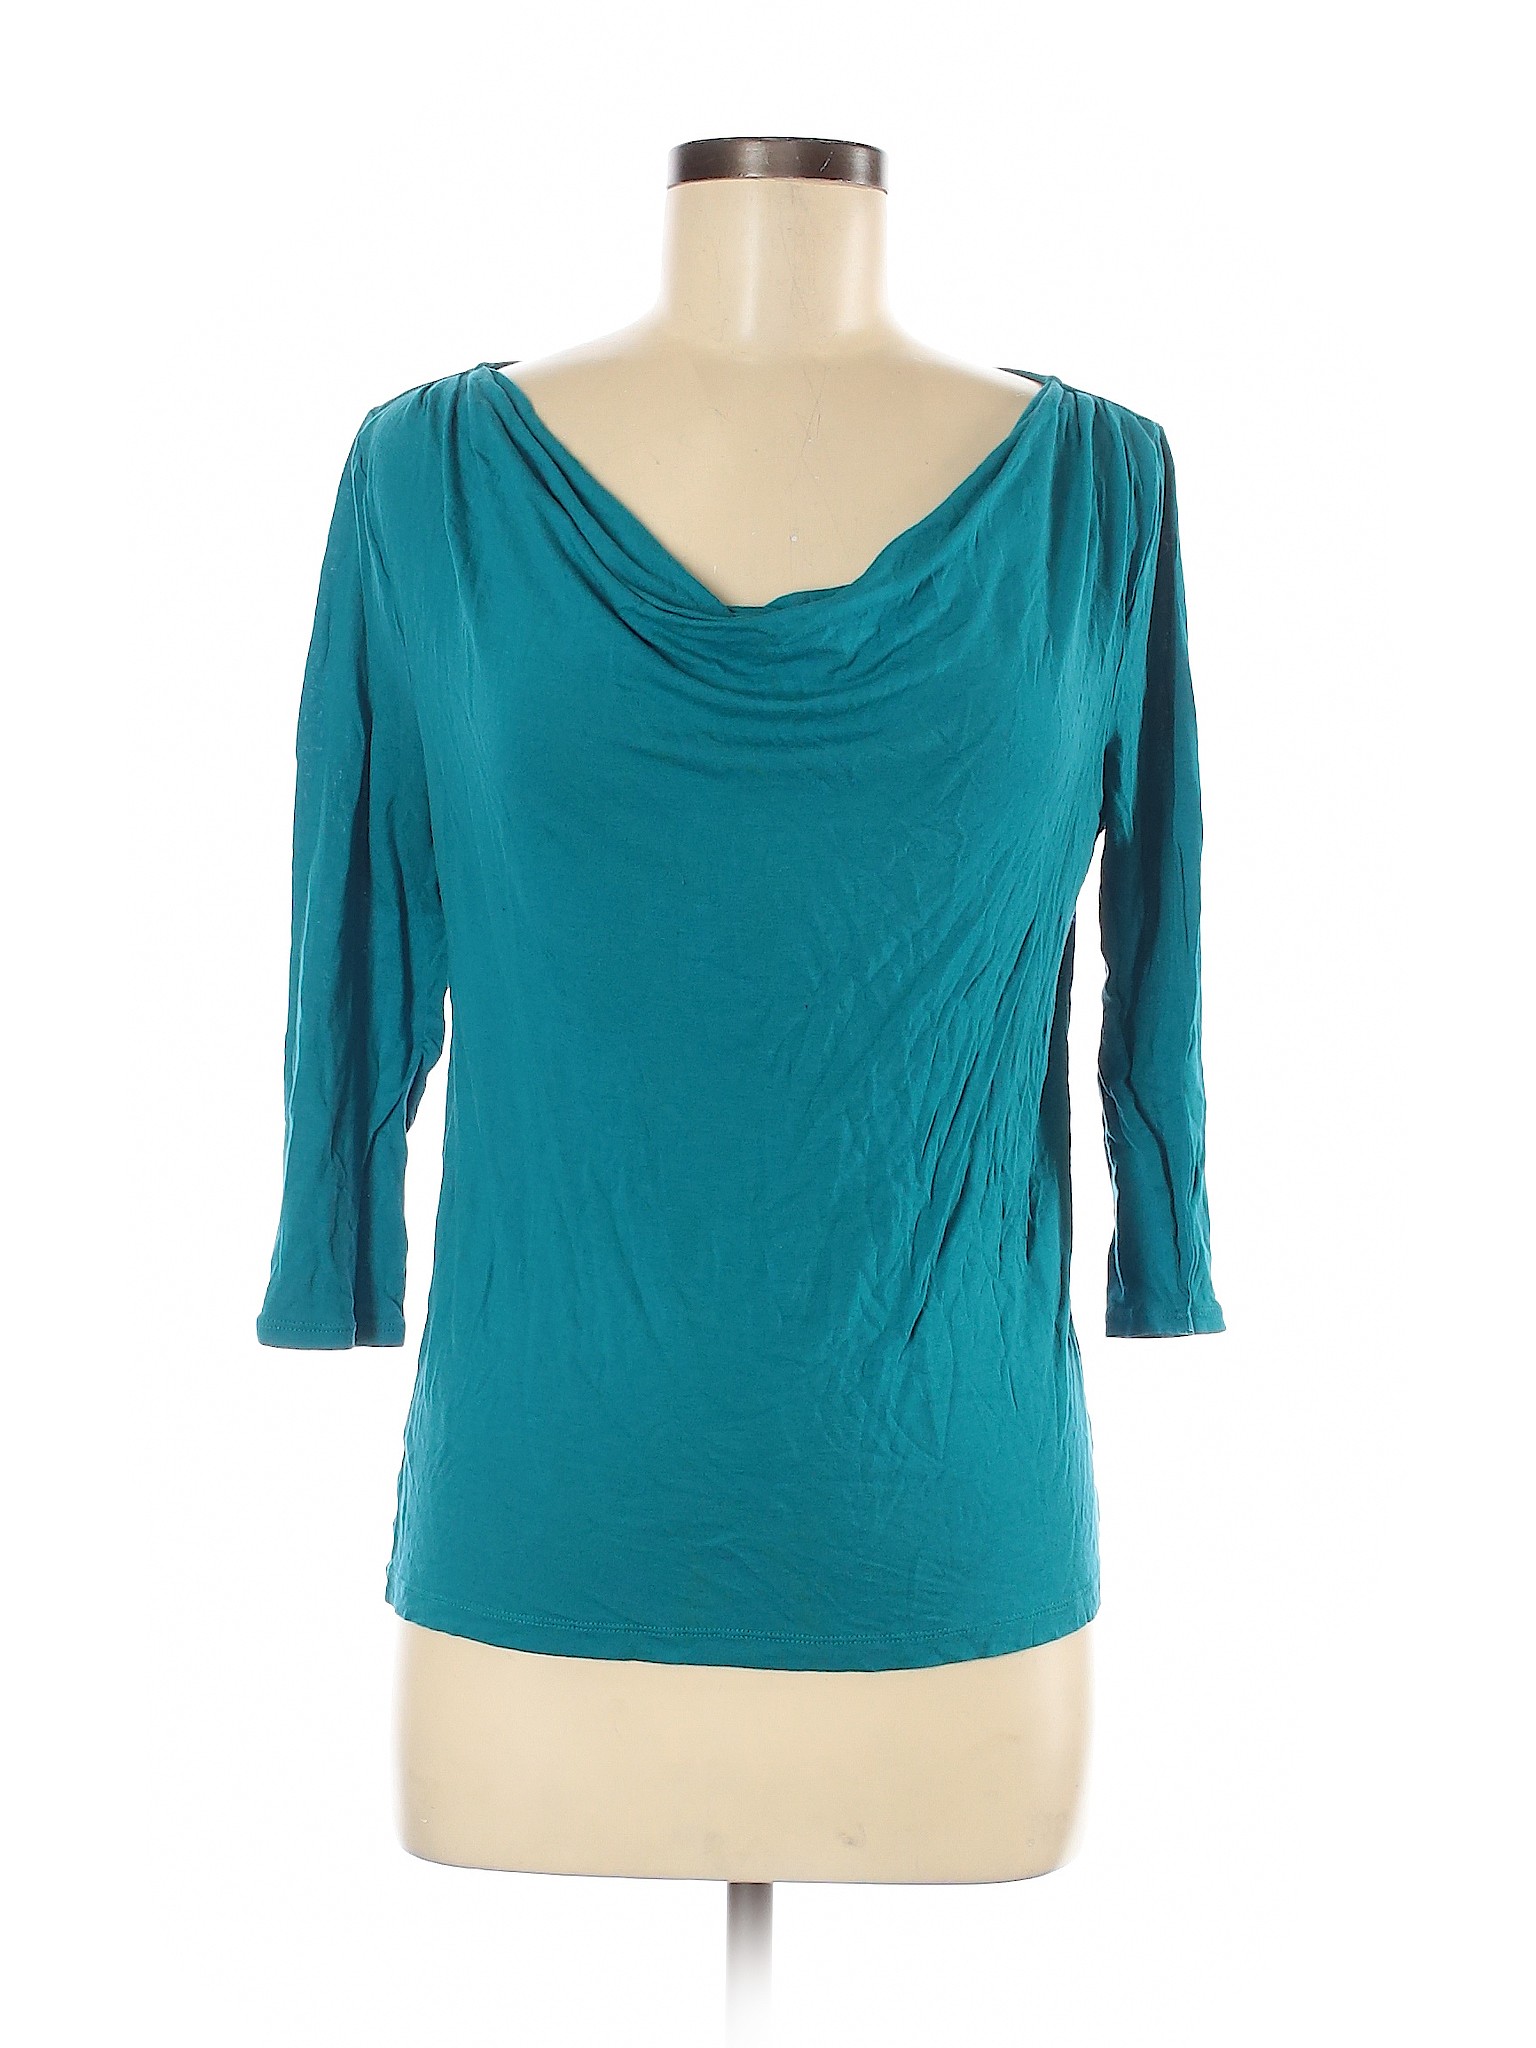 Ann Taylor LOFT Outlet Women Green 3/4 Sleeve Top M | eBay